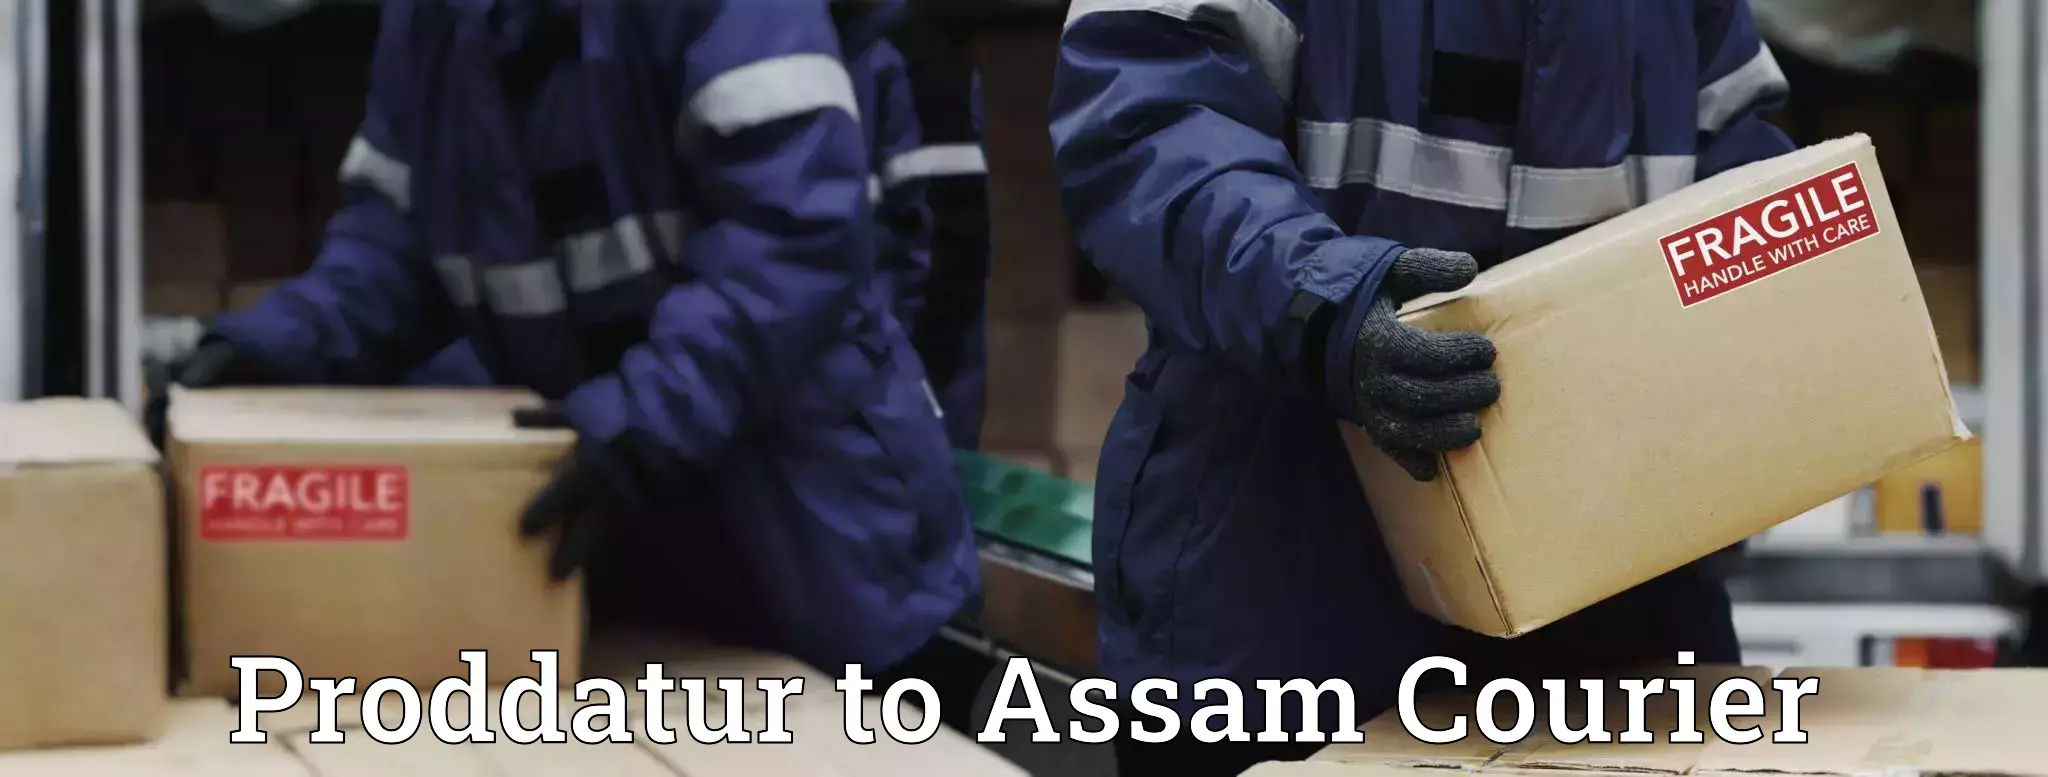 Courier membership Proddatur to Assam